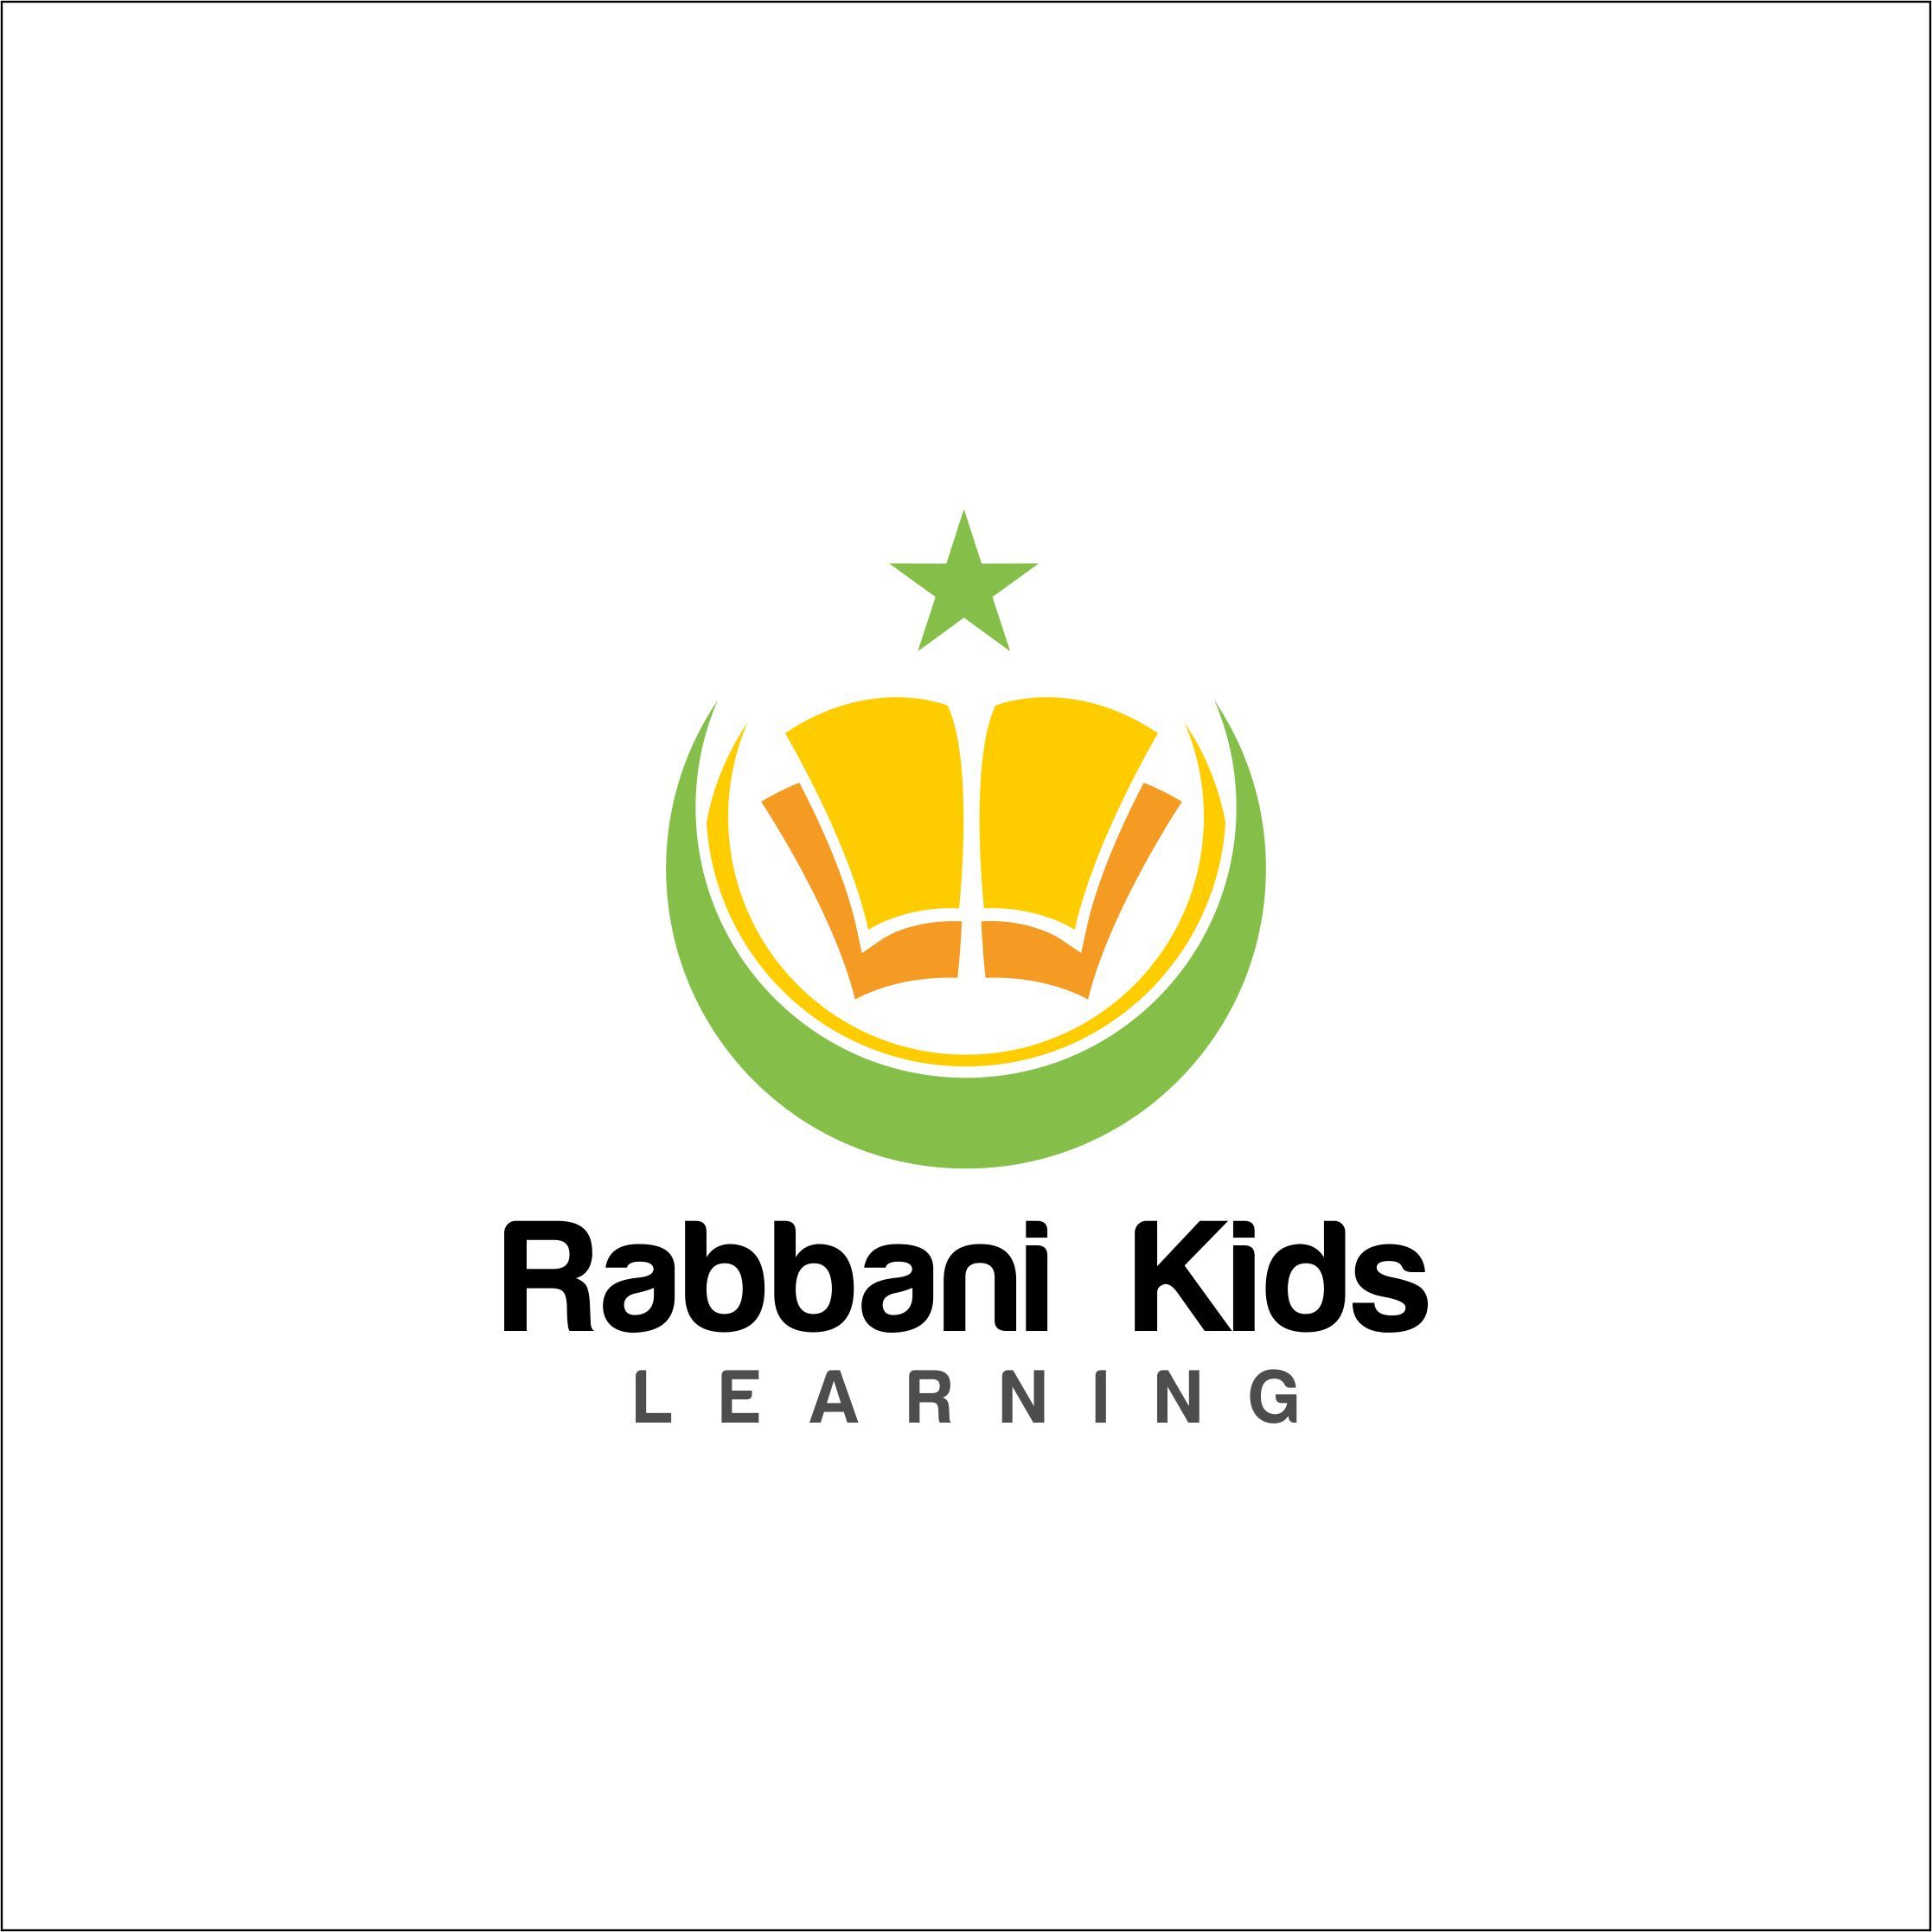 Rabbani Kids Learning